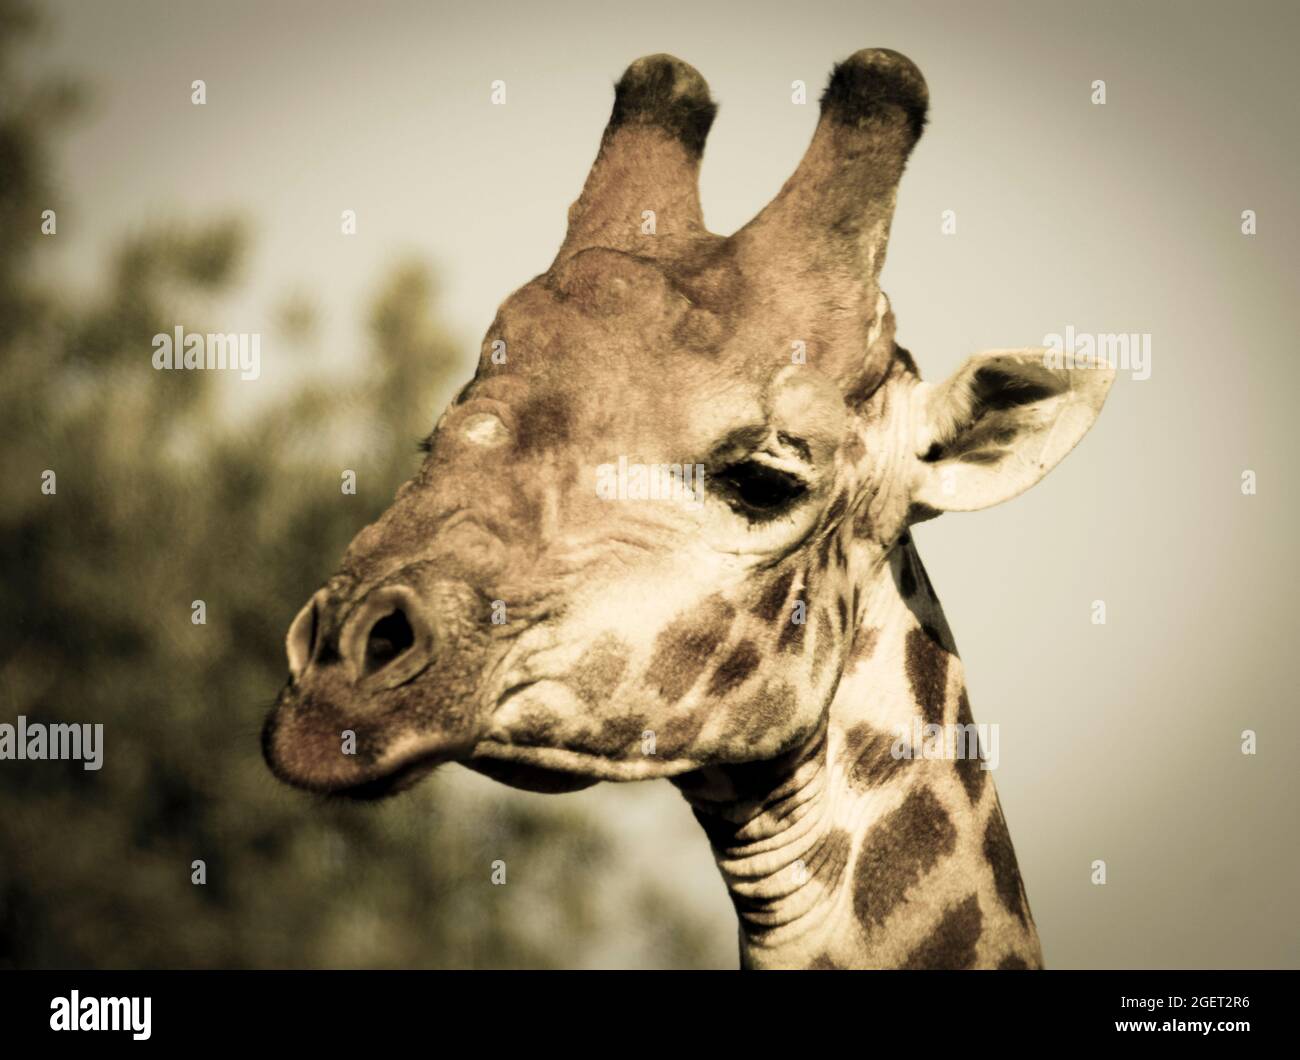 Jiraffa, Giraffa camelopardalis, in African Savannah environment, Kruger National Park, South Africa. Stock Photo